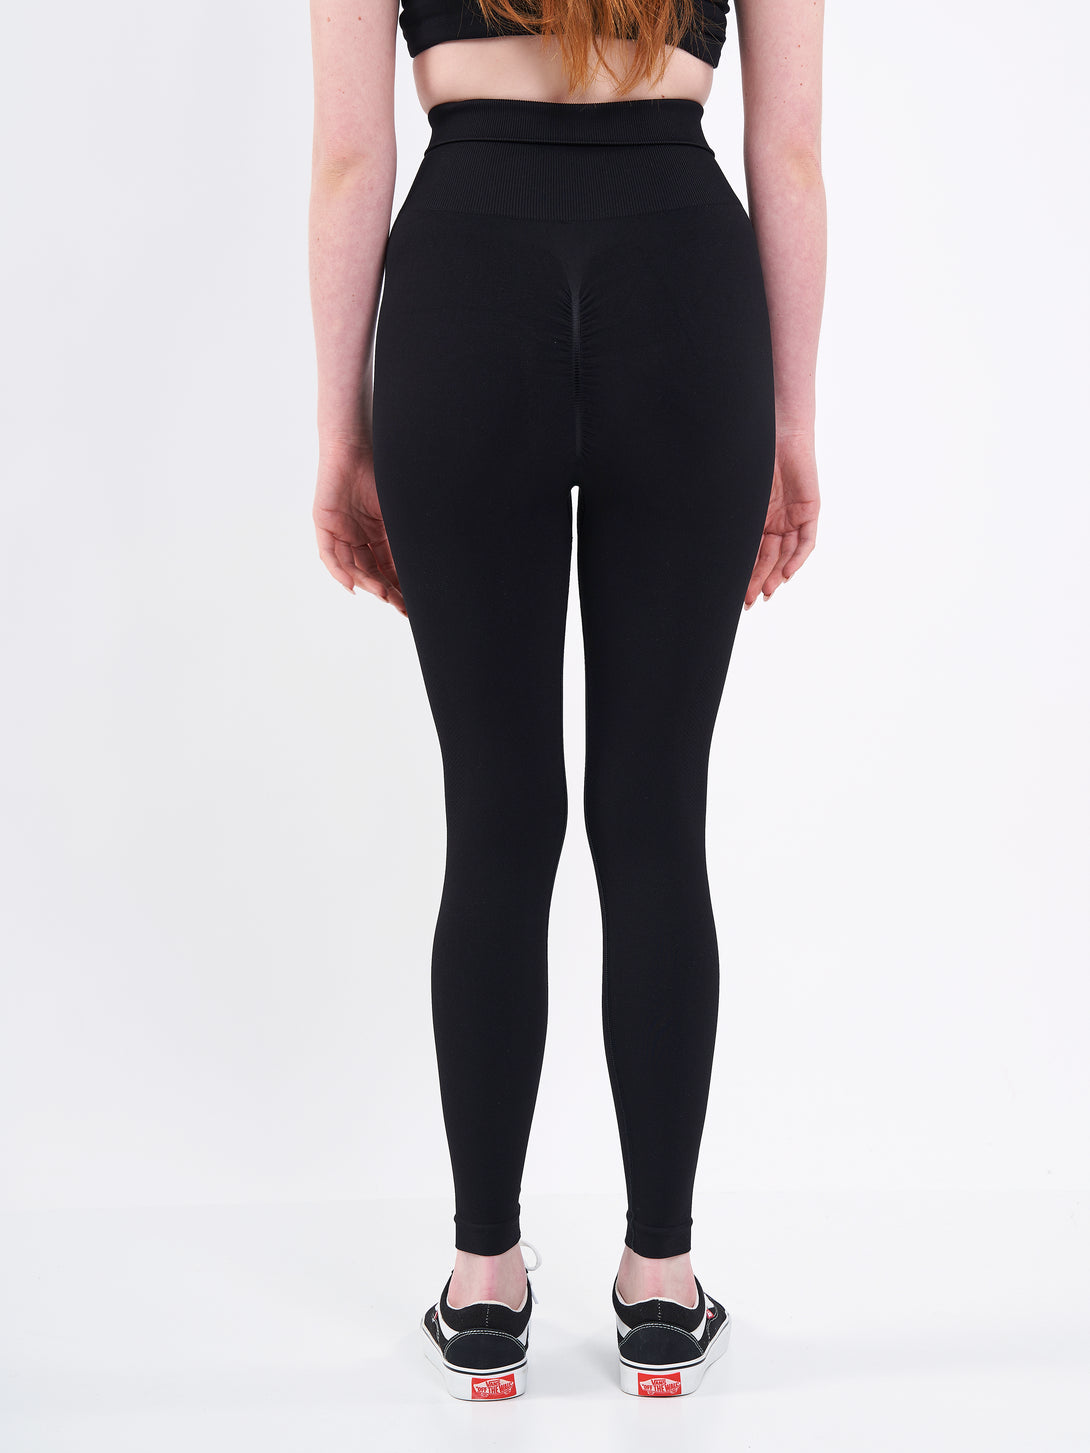 A Women Wearing Deep Black Color Zen Confidence Seamless Compressive Leggings. Body-Shaping